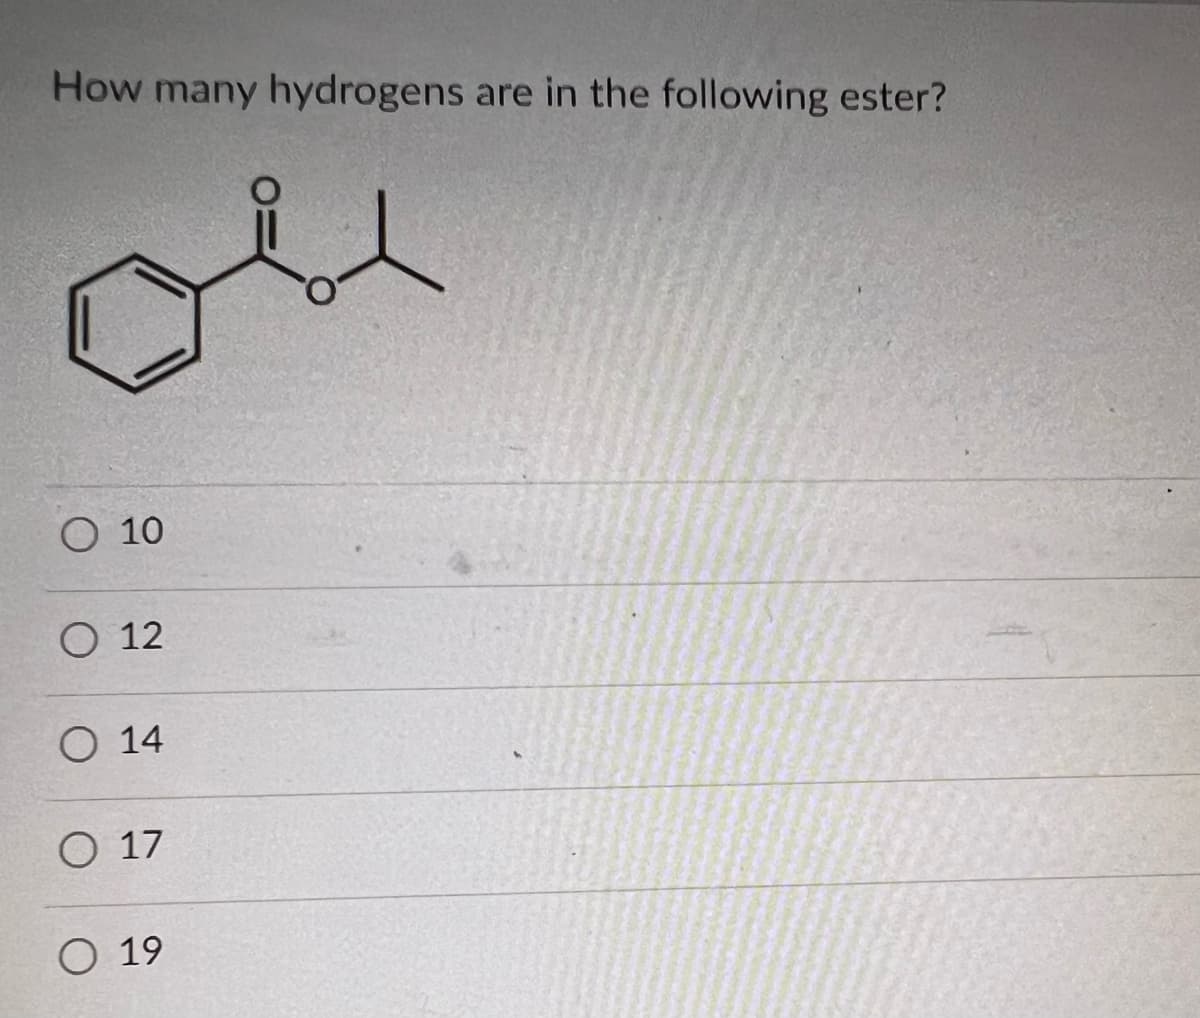 How many hydrogens are in the following ester?
ou
O 10
12
O 14
O 17
O 19